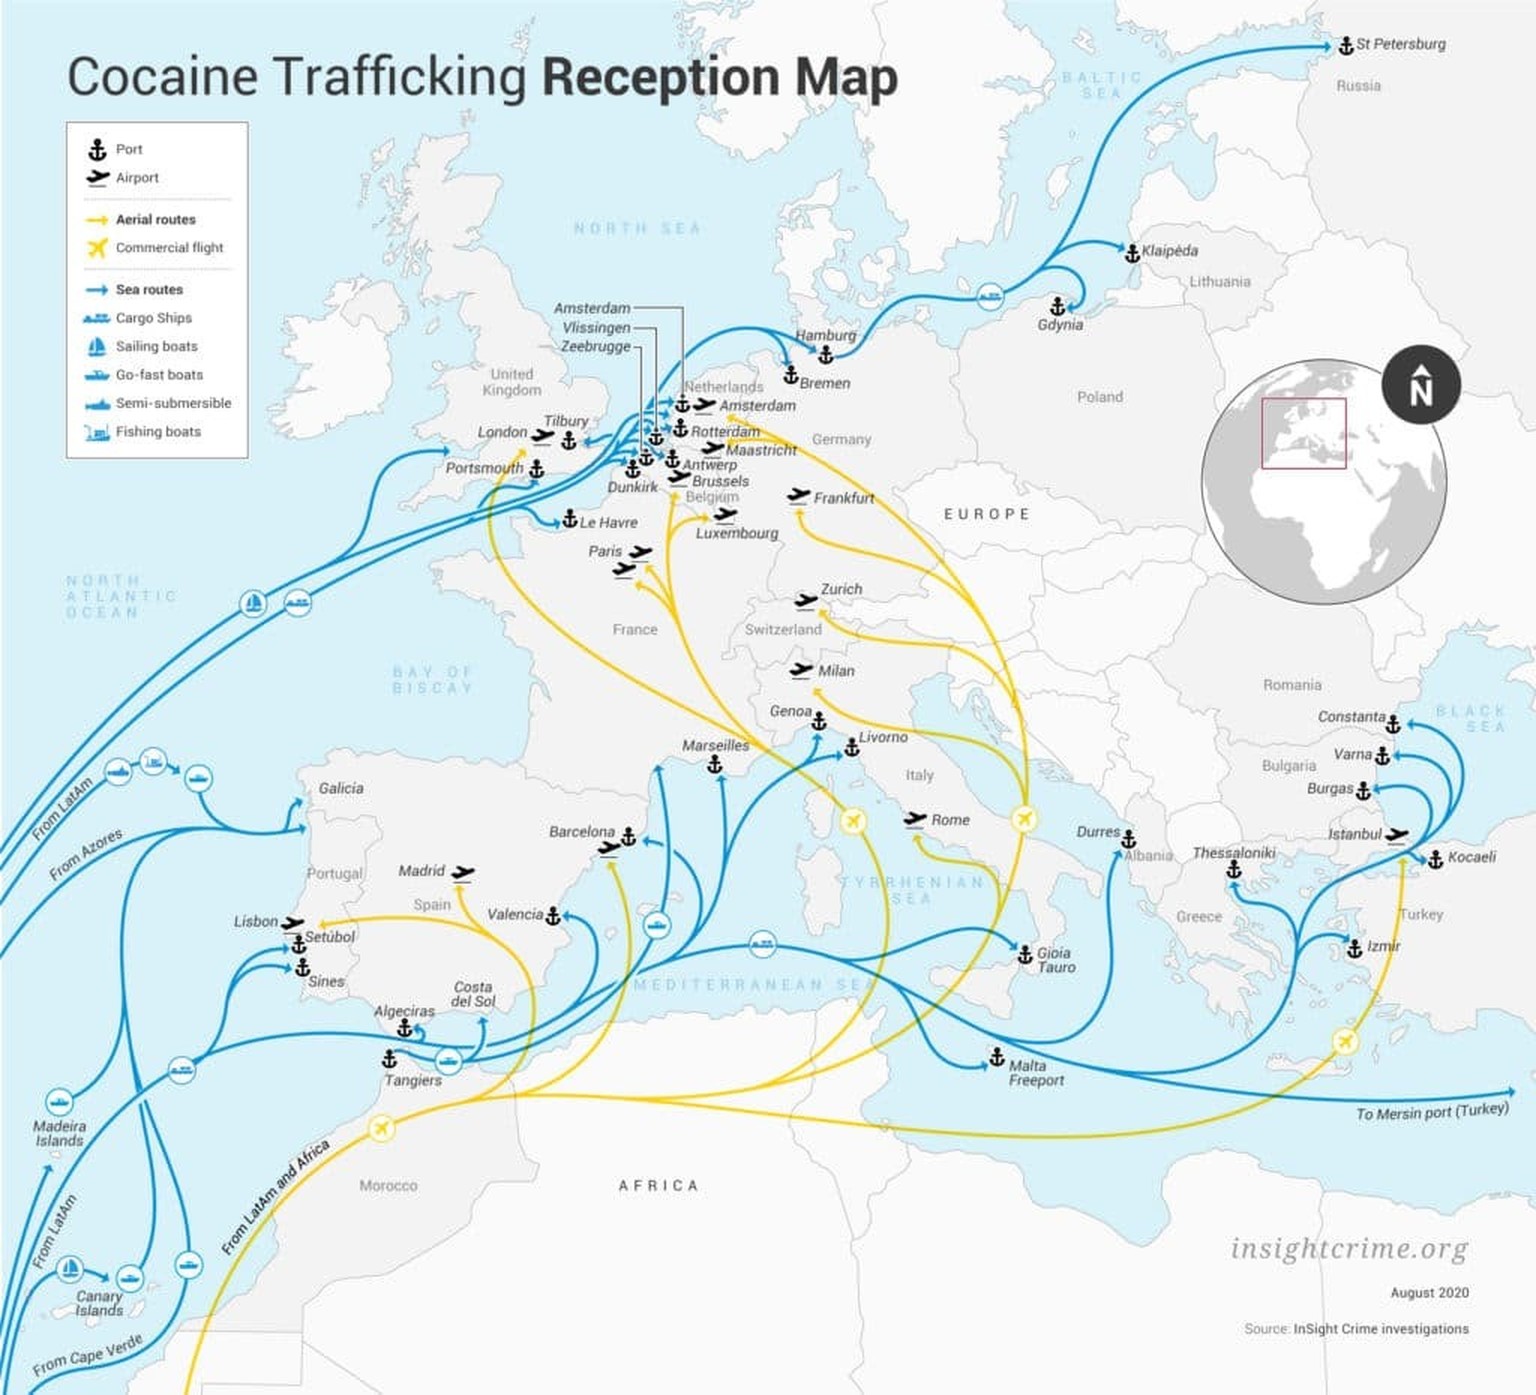 Kokain-Schmuggel nach Europa
https://insightcrime.org/investigations/cocaine-europe-underestimated-threat/